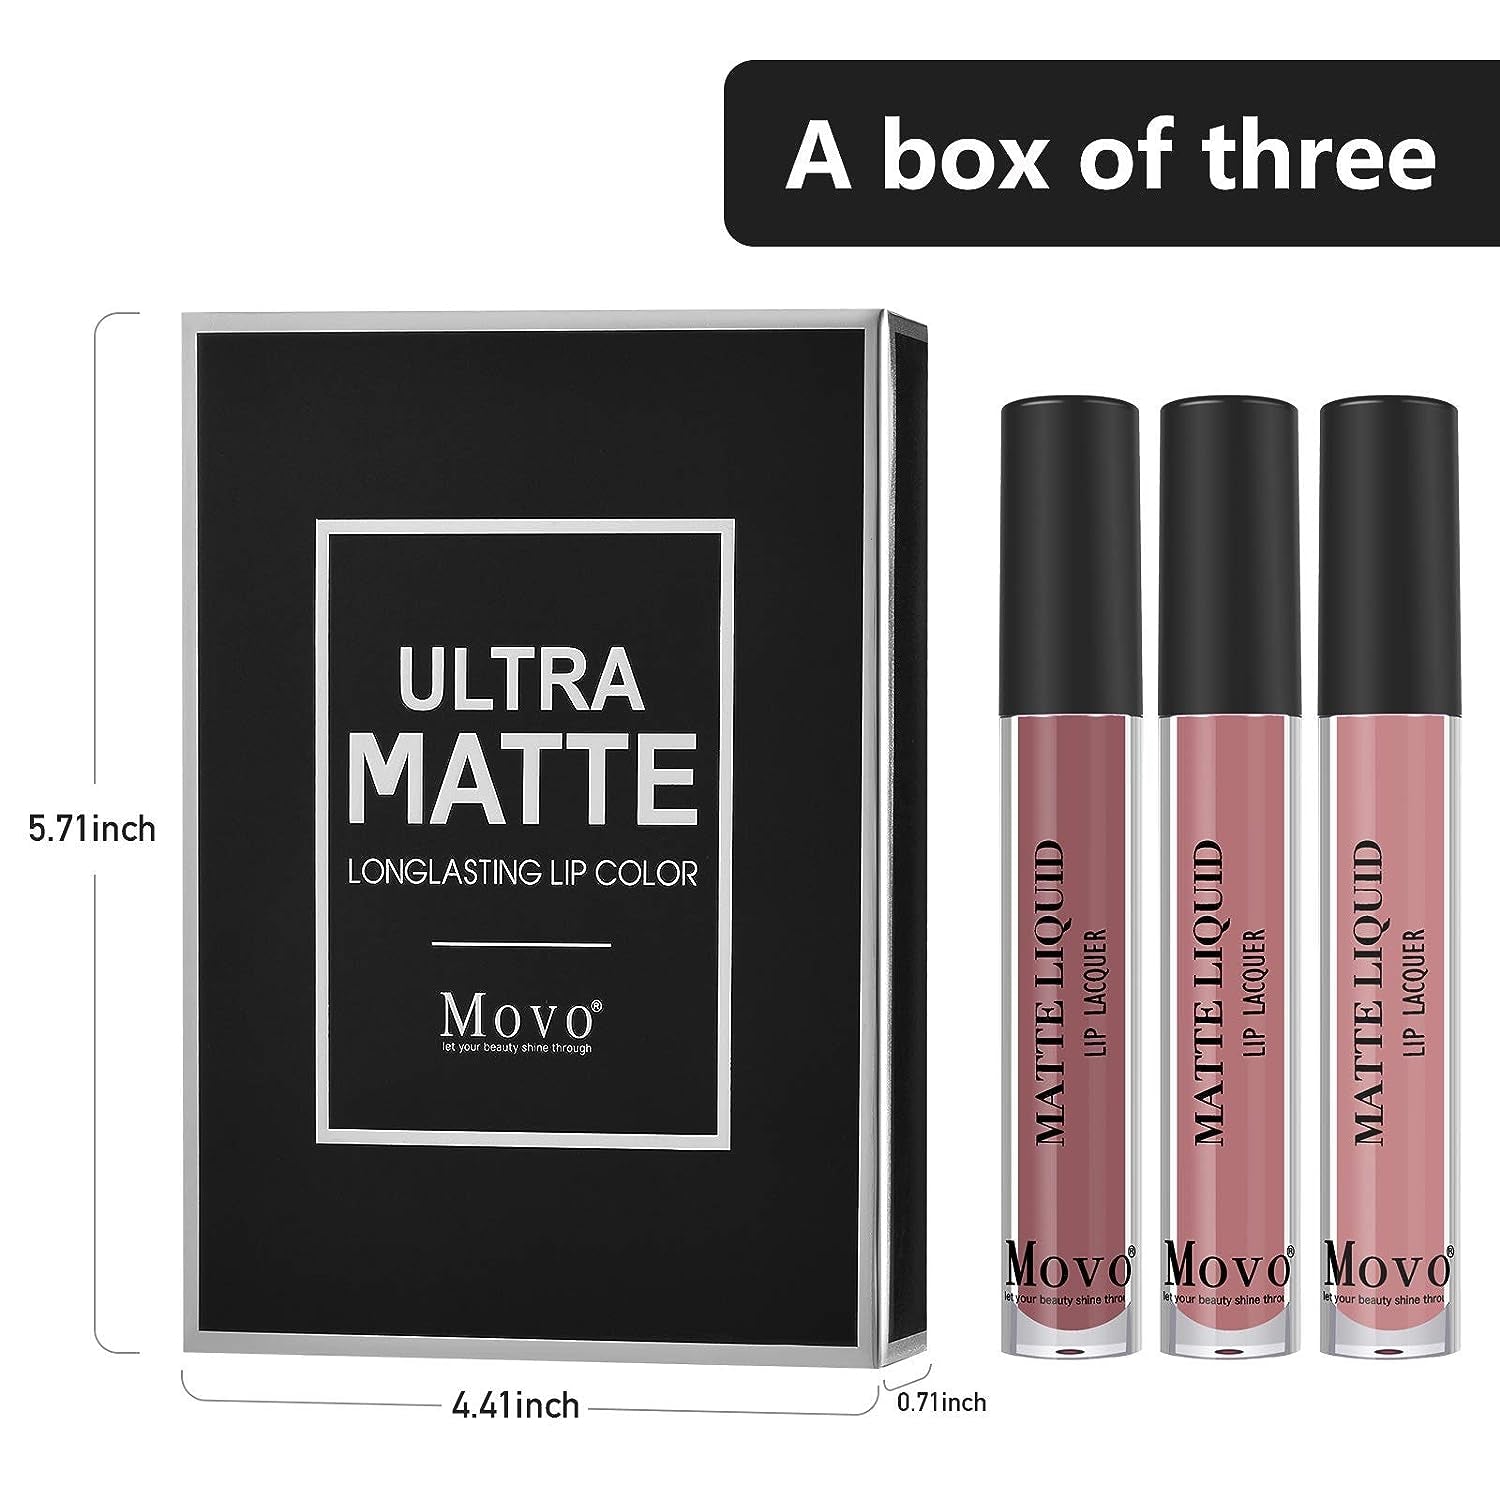 3Pcs Matte Liquid Lipstick Set Kit Longlasting Waterproof Lip Gloss Non-Stick Cup Nude Lip Lacquer Makeup Gift Set(3 Matte #4)